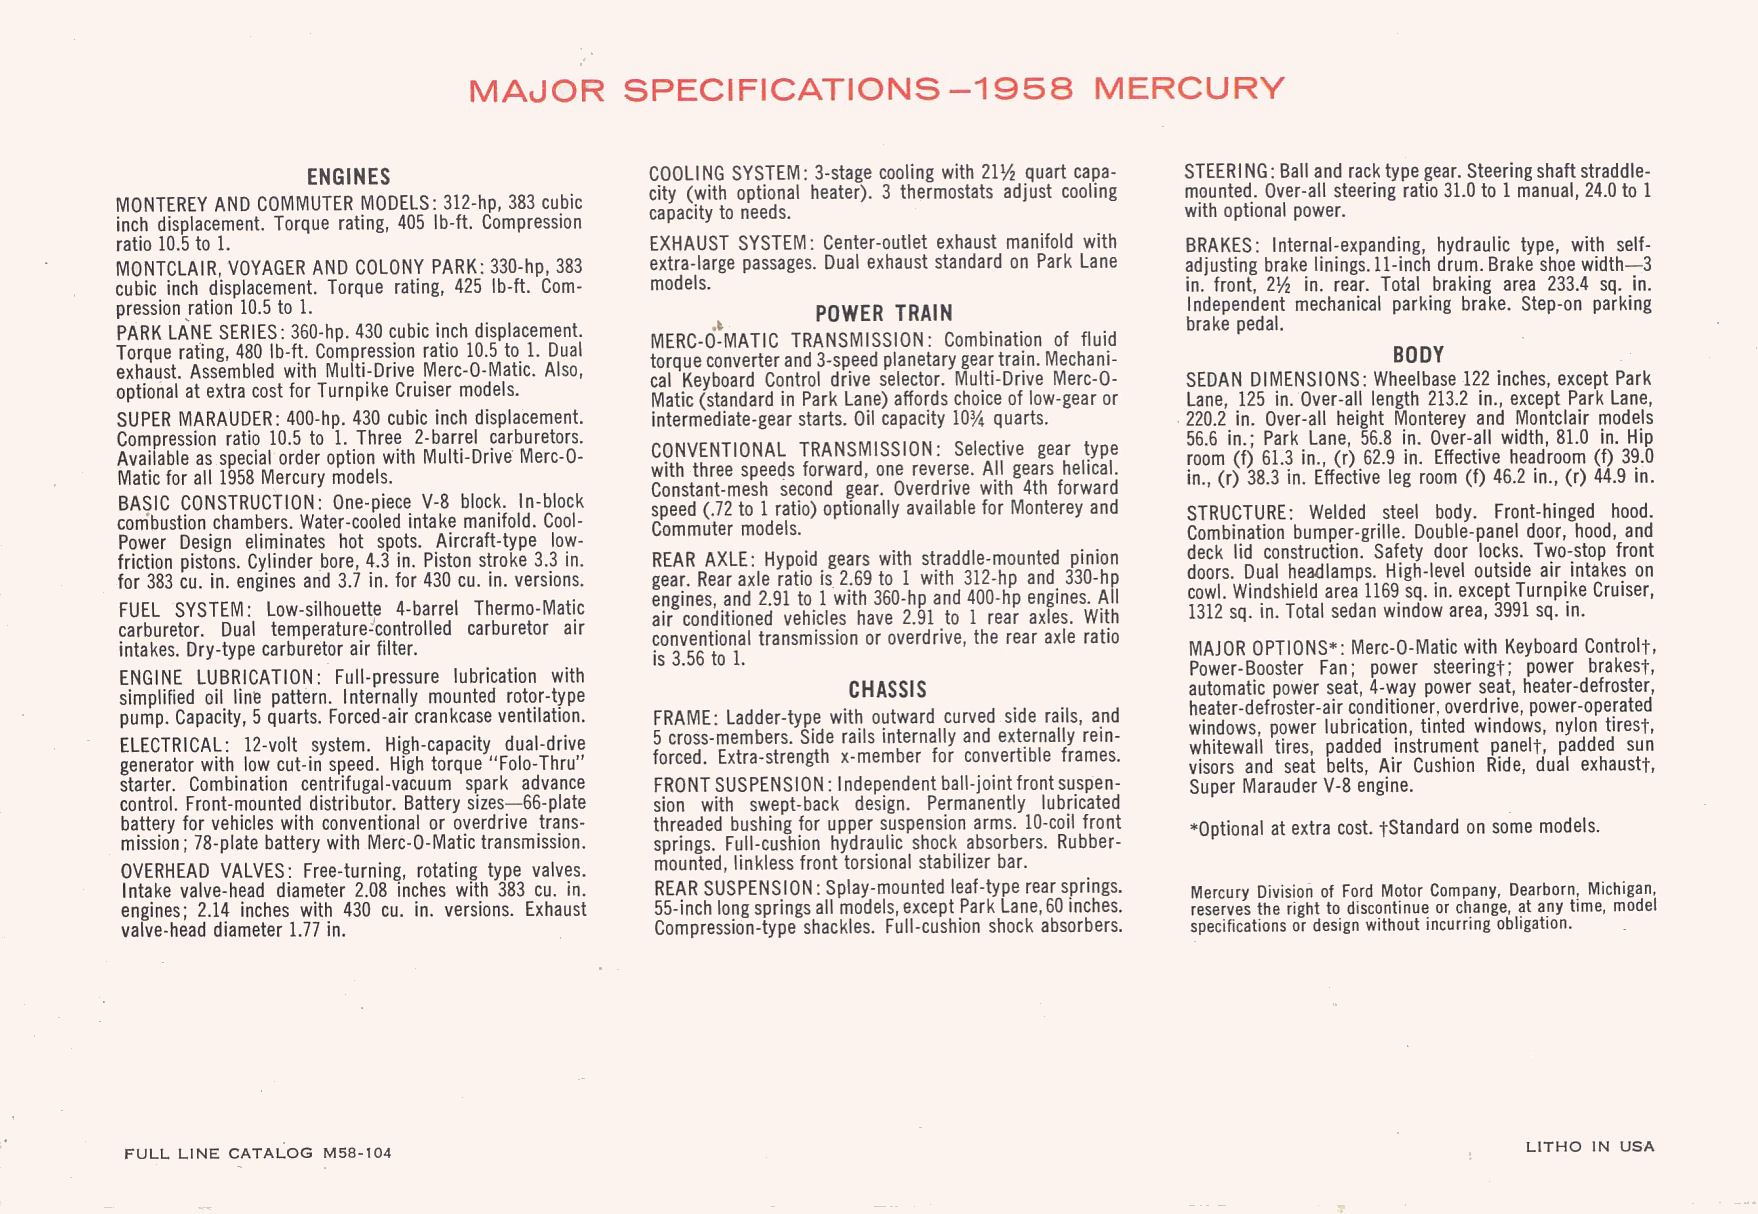 1958 Mercury Brochure-32